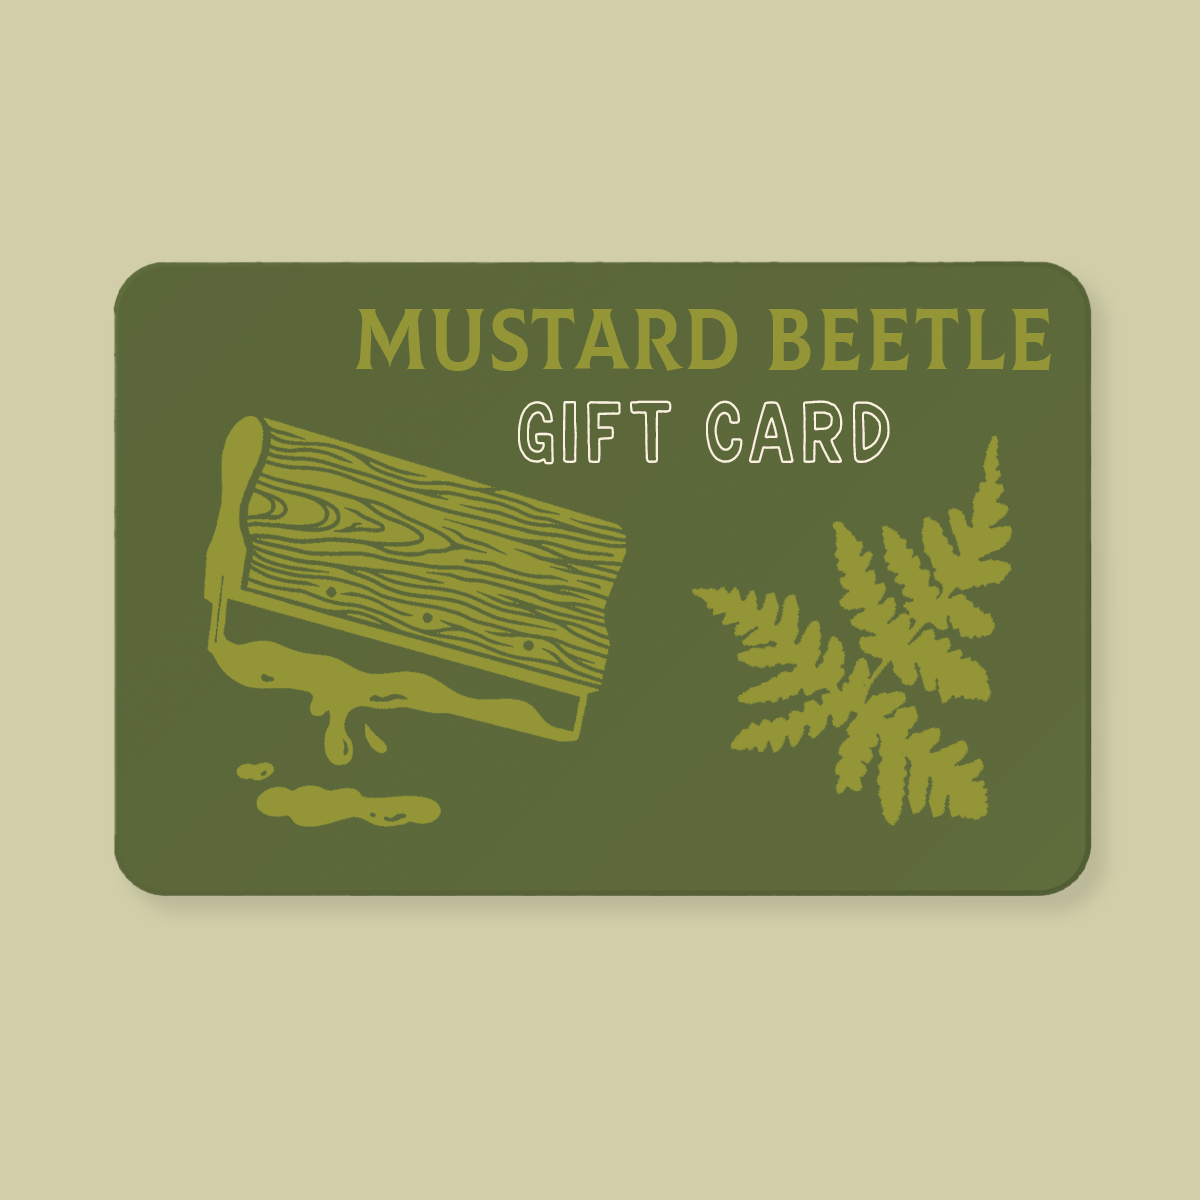 Mustard Beetle Gift Card